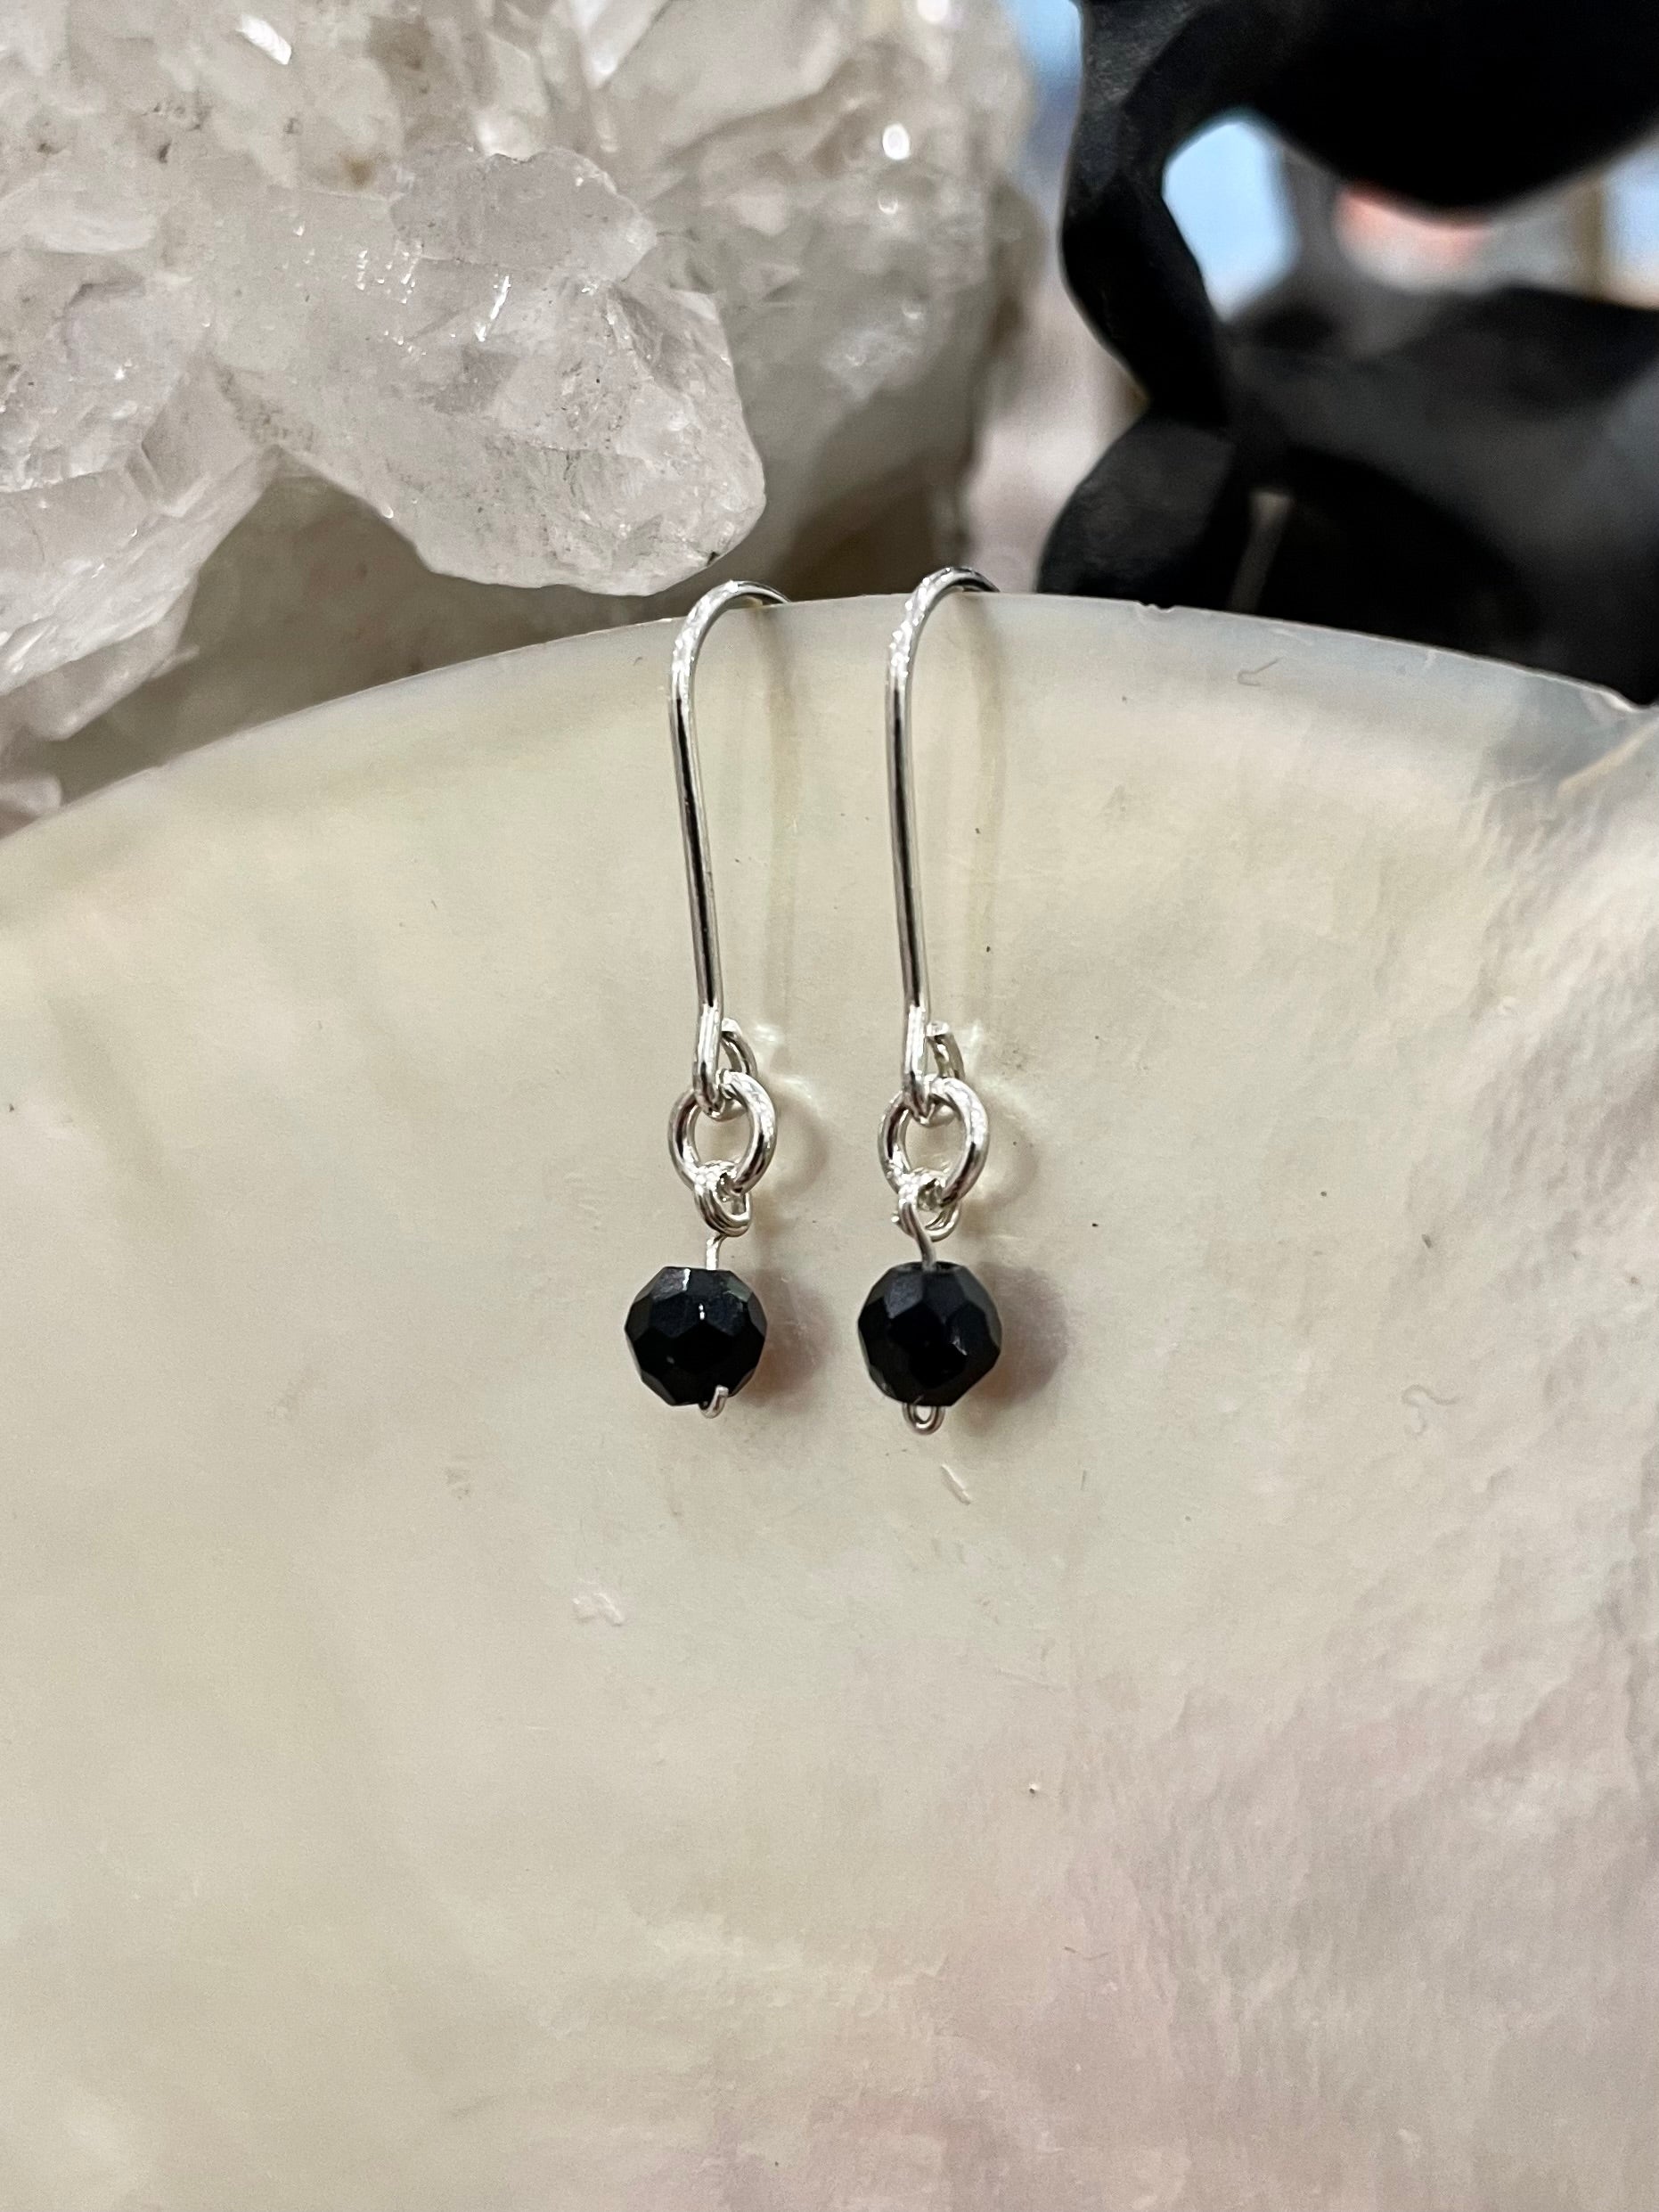 Mini gemstone hook earrings, black onyx earrings, black onyx earrings in silver